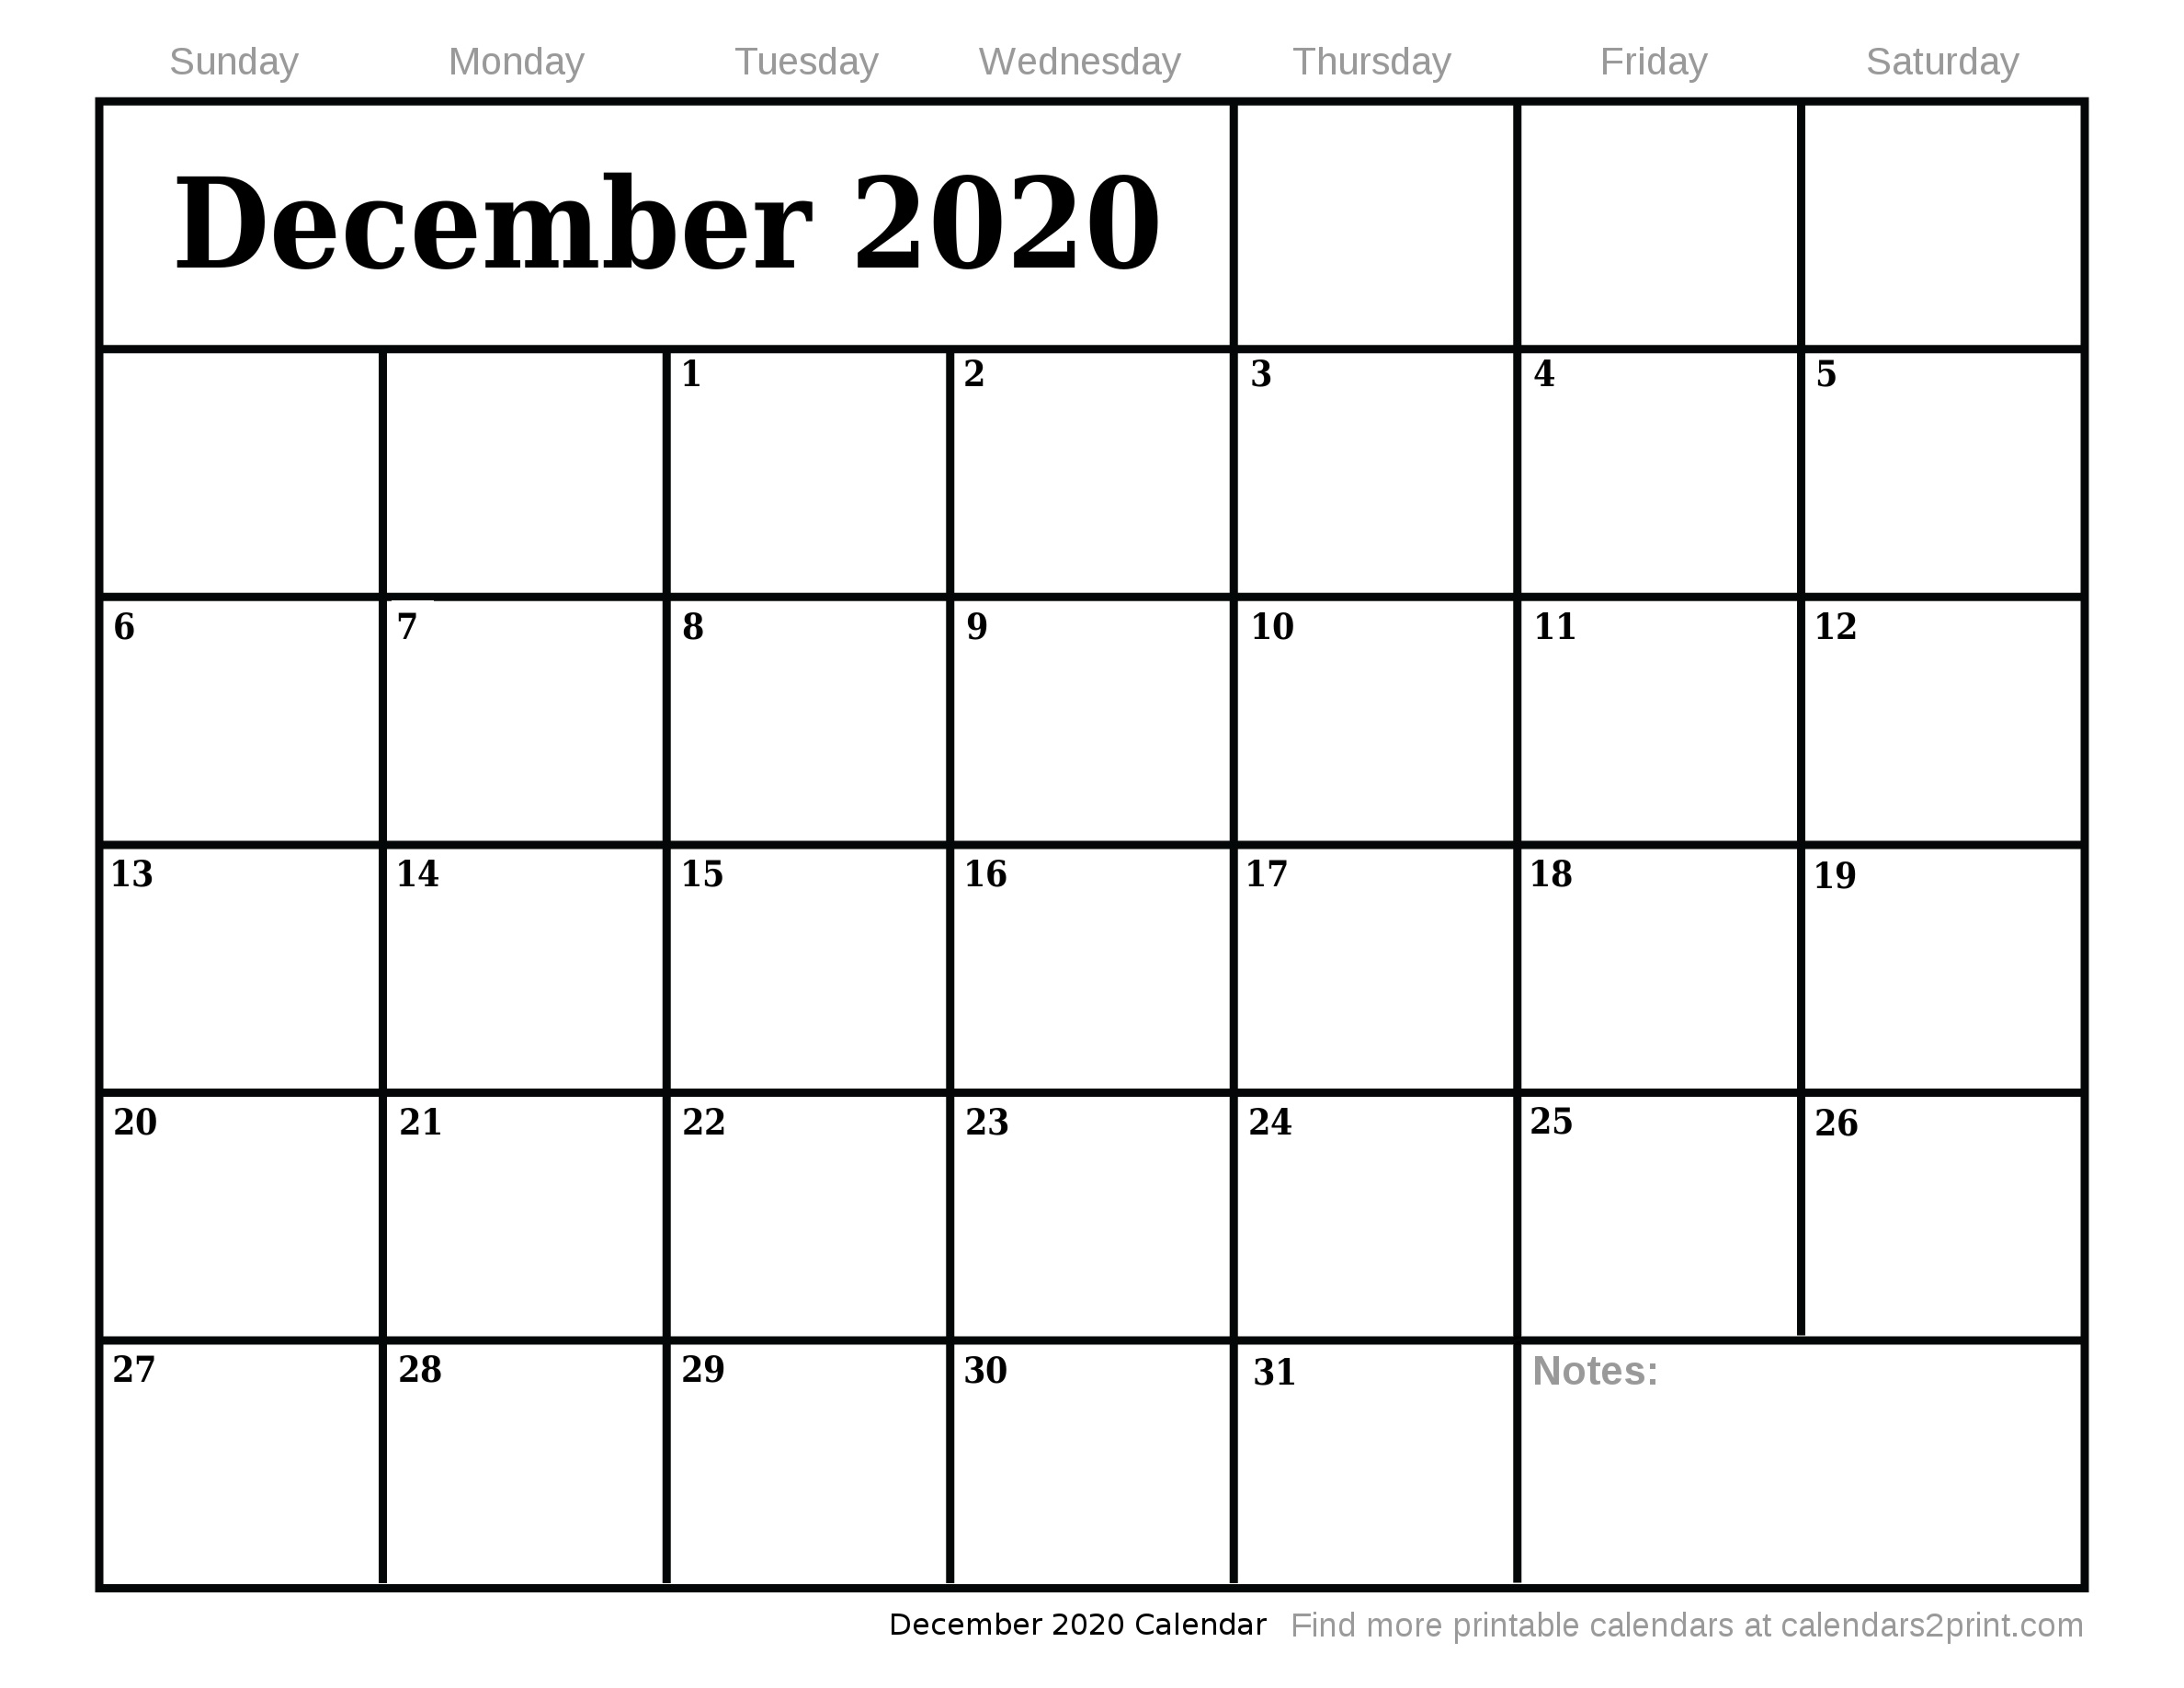 Dec 2020 Printable Calendar